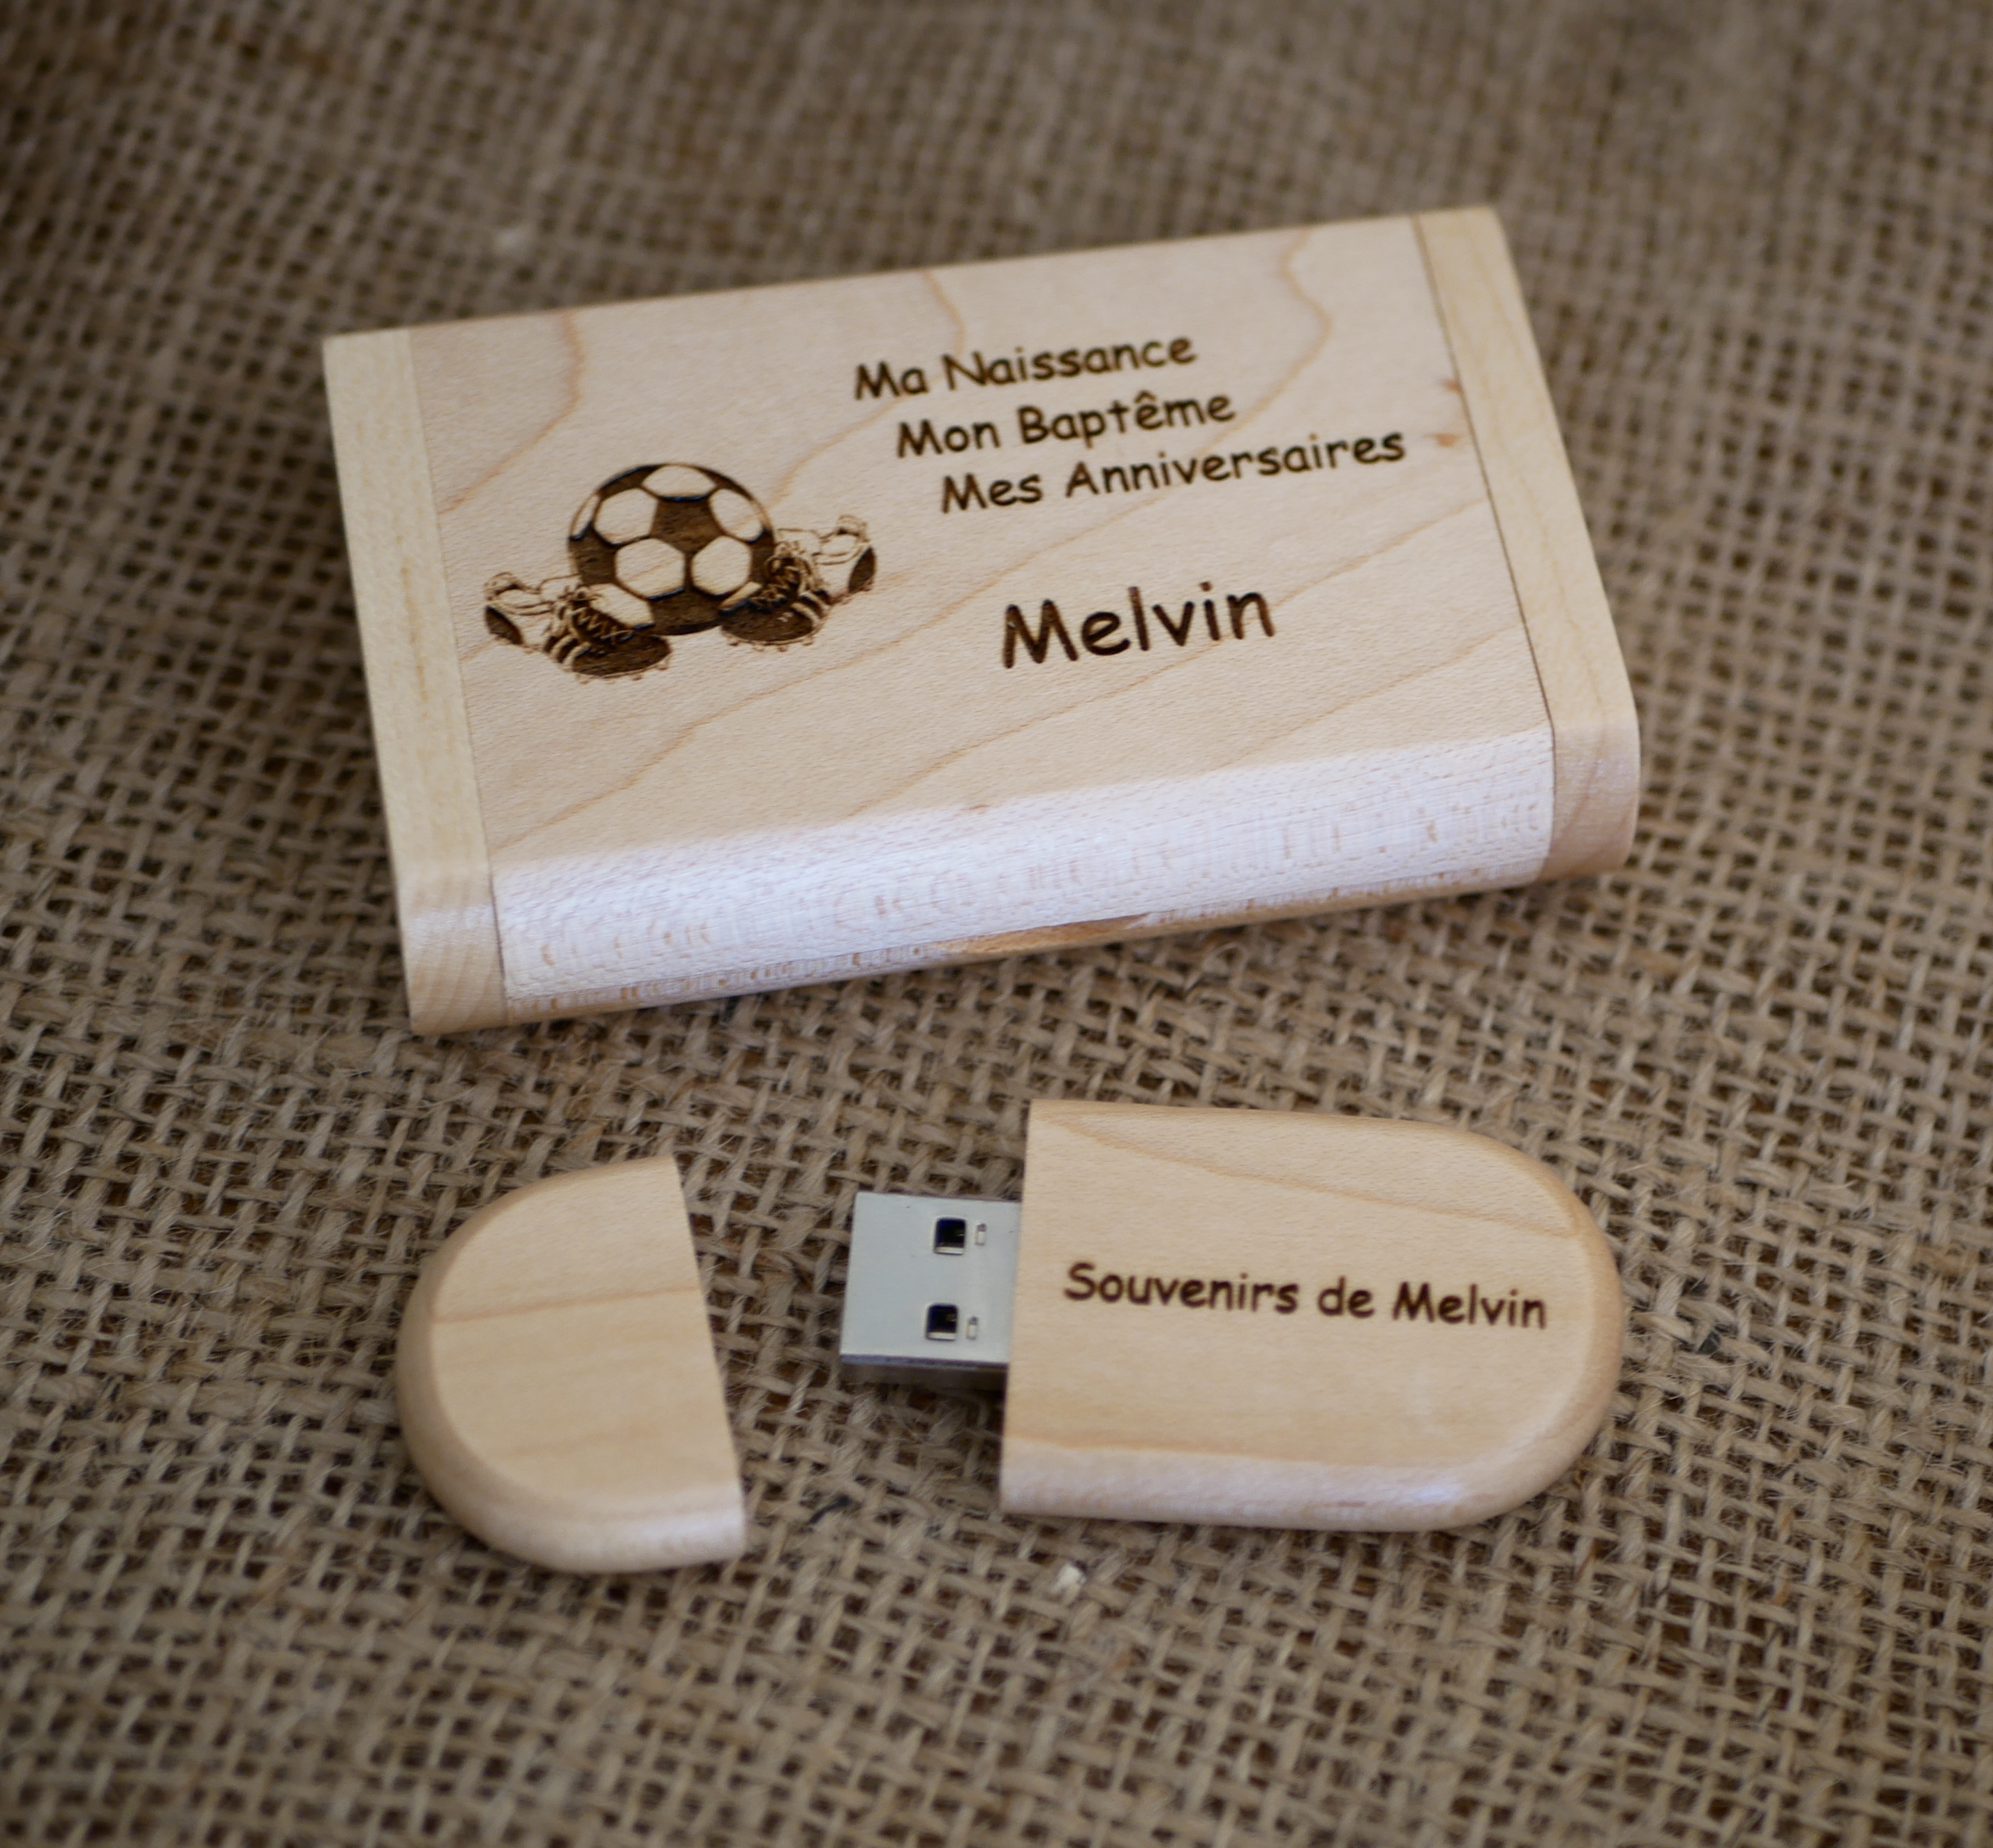 Engraving on a maple USB key